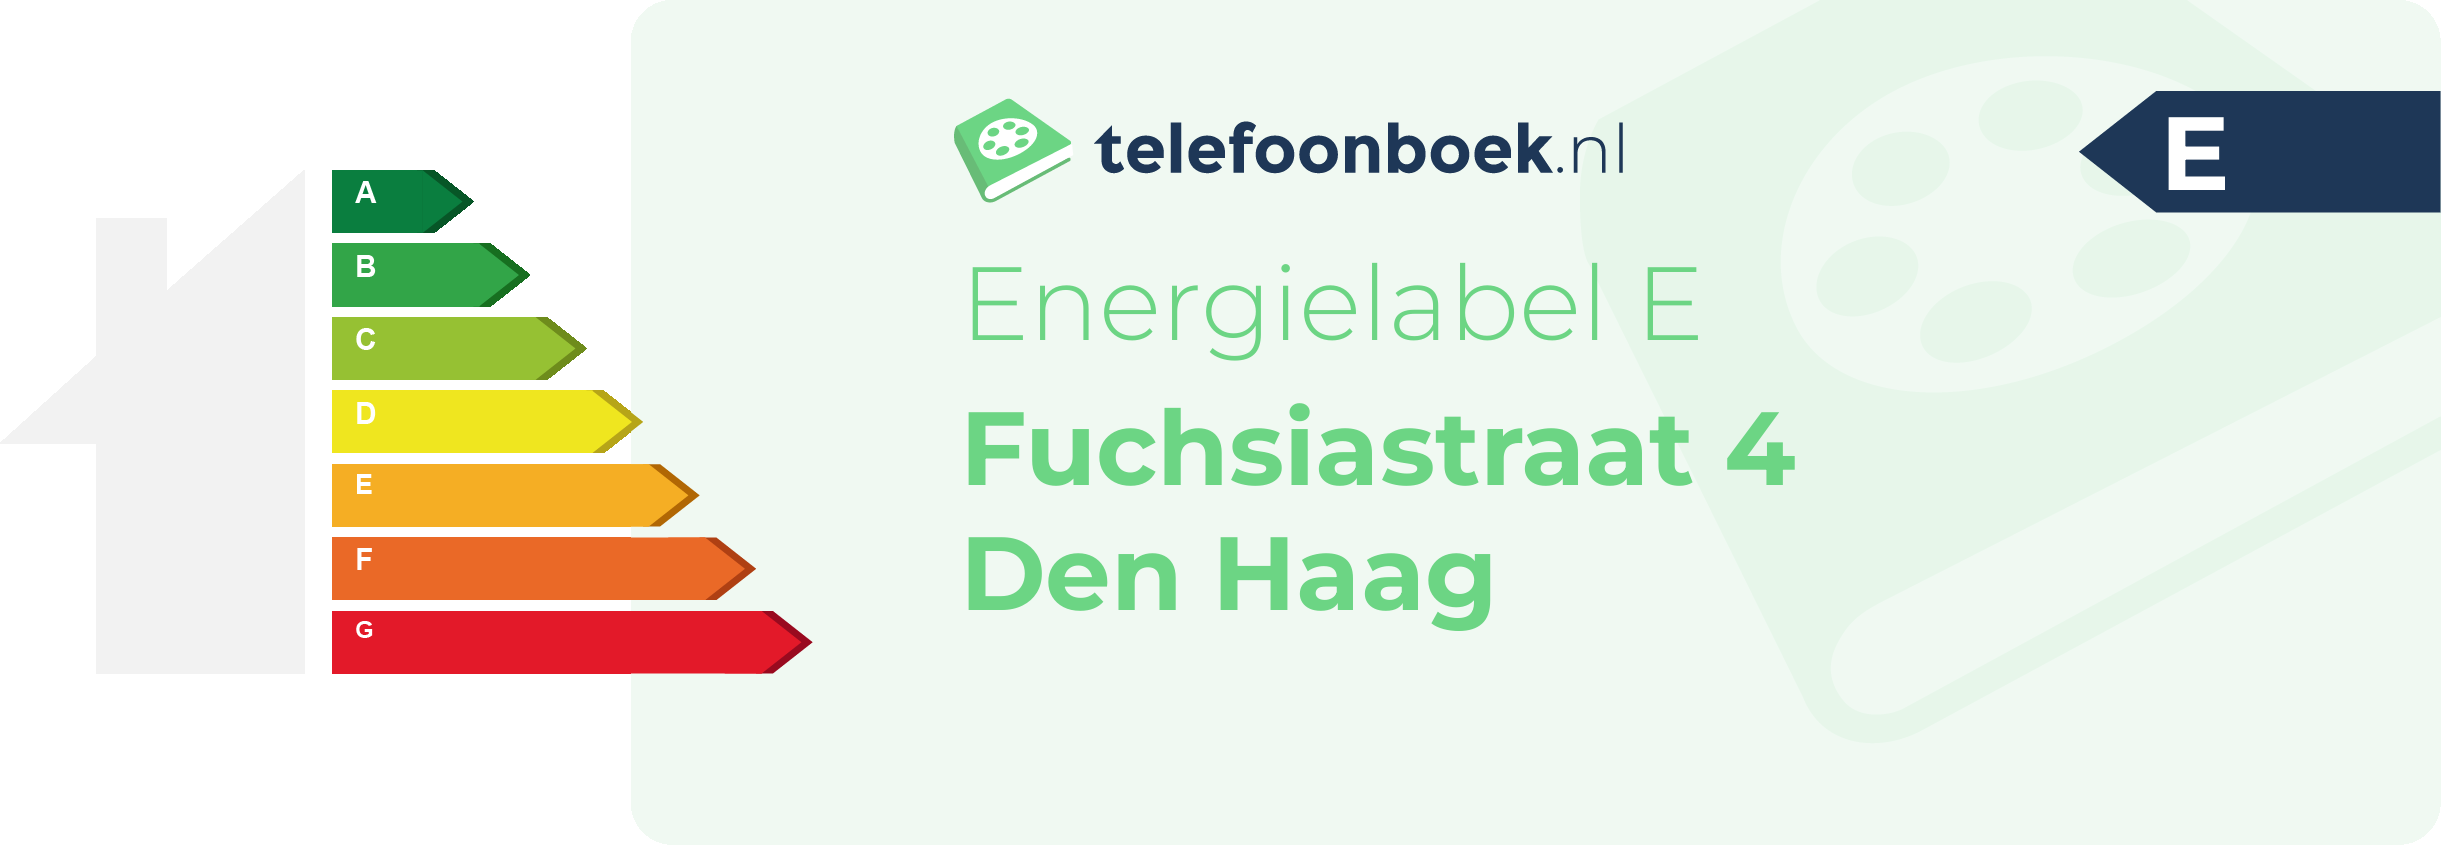 Energielabel Fuchsiastraat 4 Den Haag